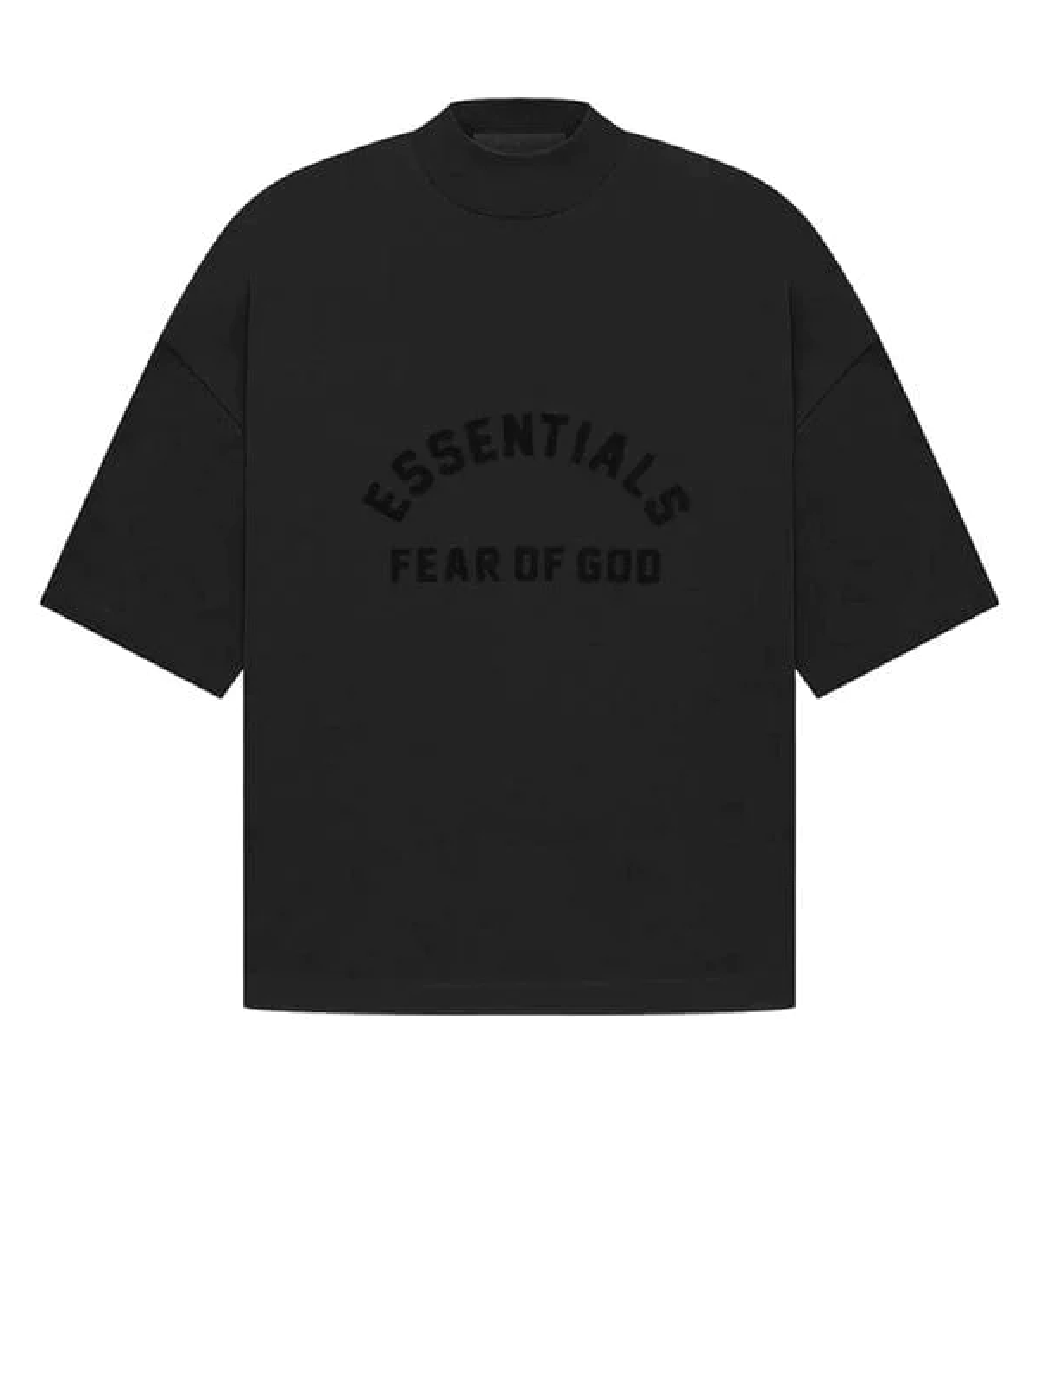 fear of god t shirt black